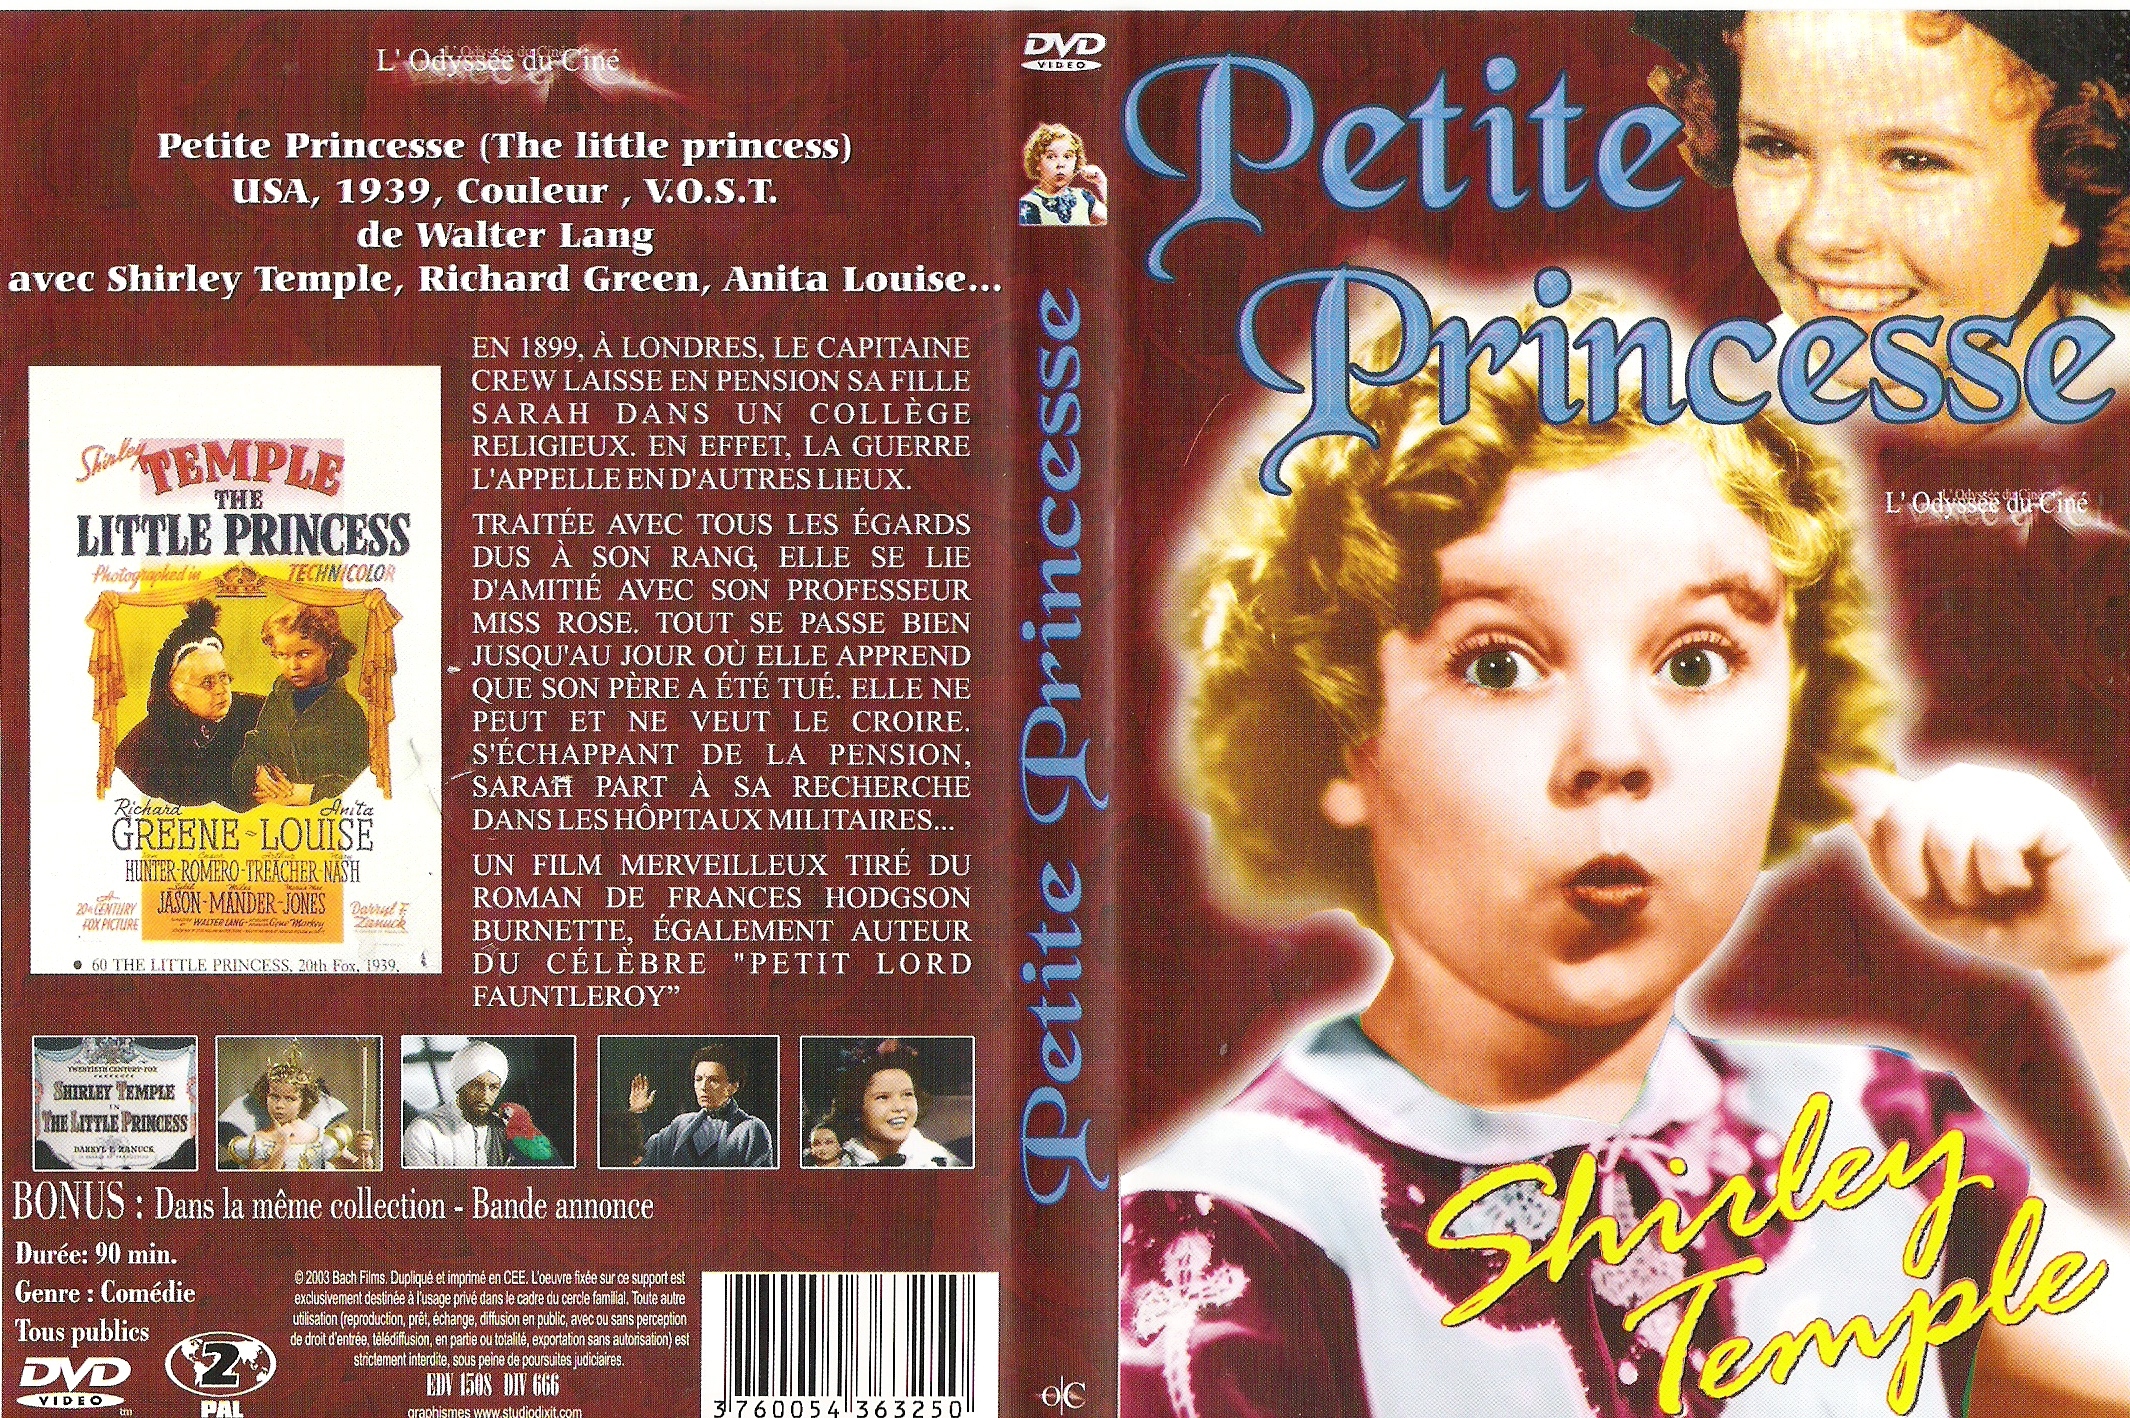 Jaquette DVD Petite princesse